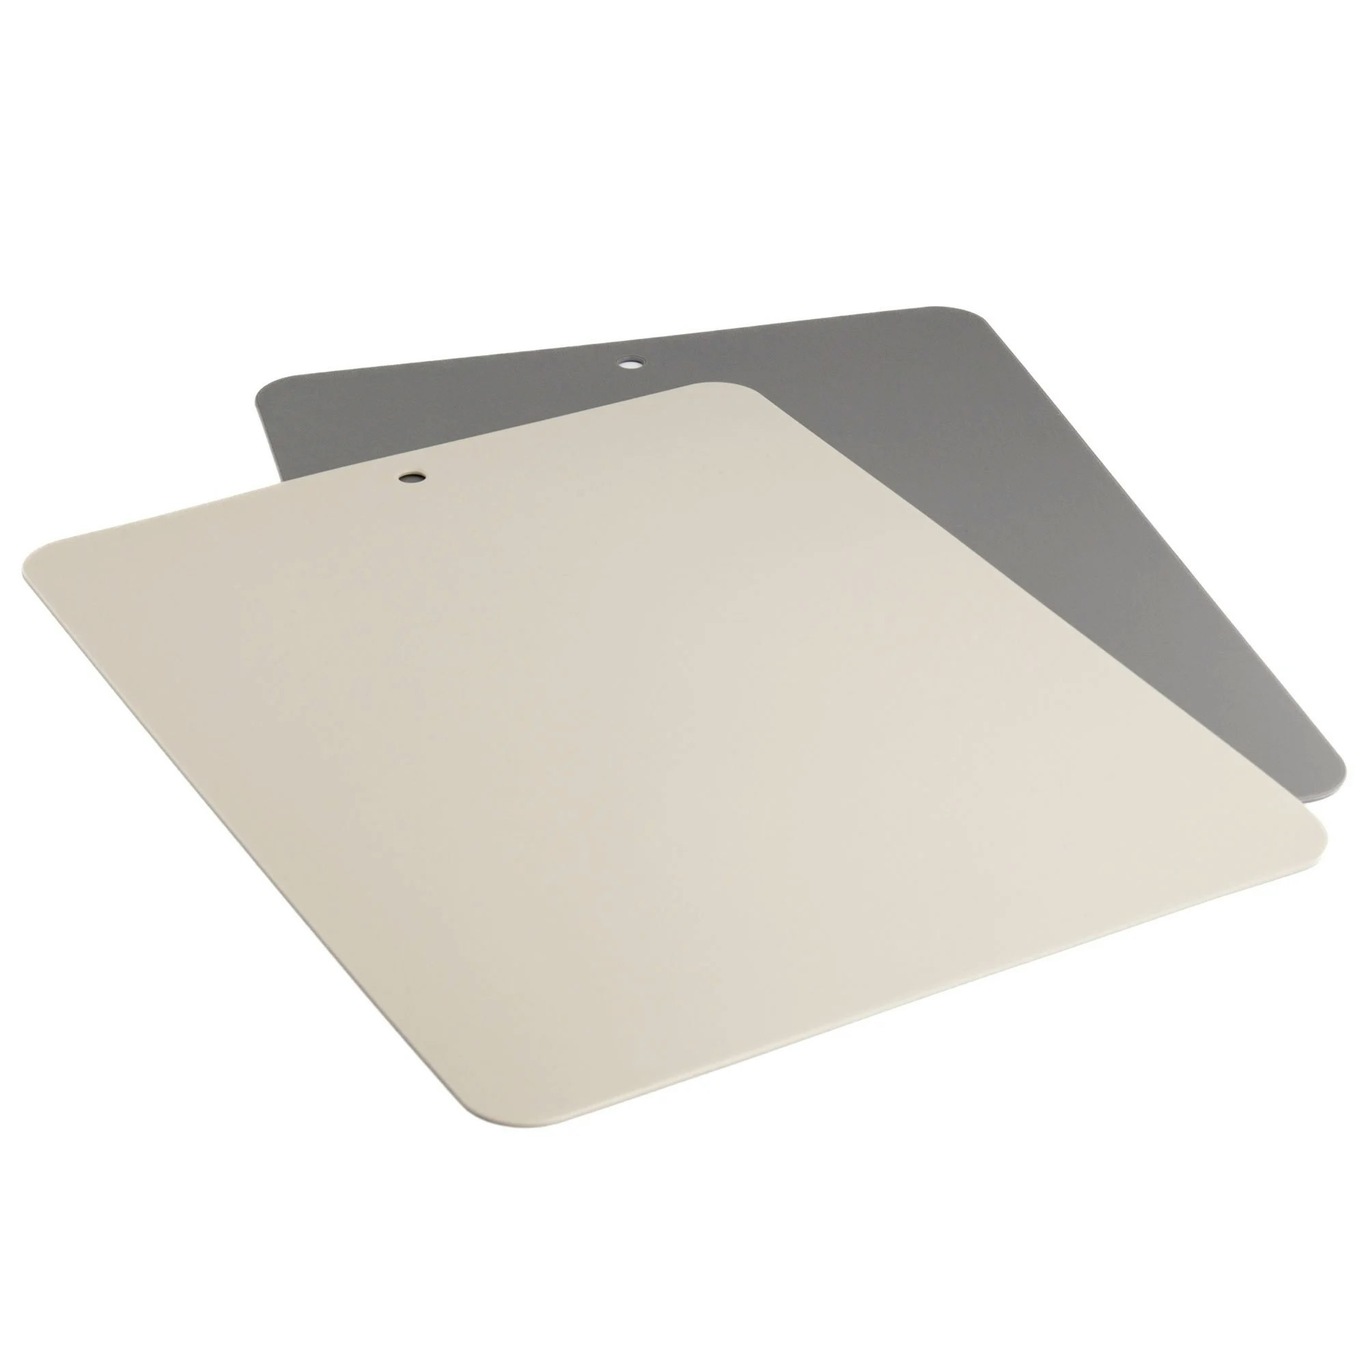 https://royaldesign.com/image/2/mareld-mareld-2-pack-flexible-cutting-board-bioplastic-beige-0?w=800&quality=80